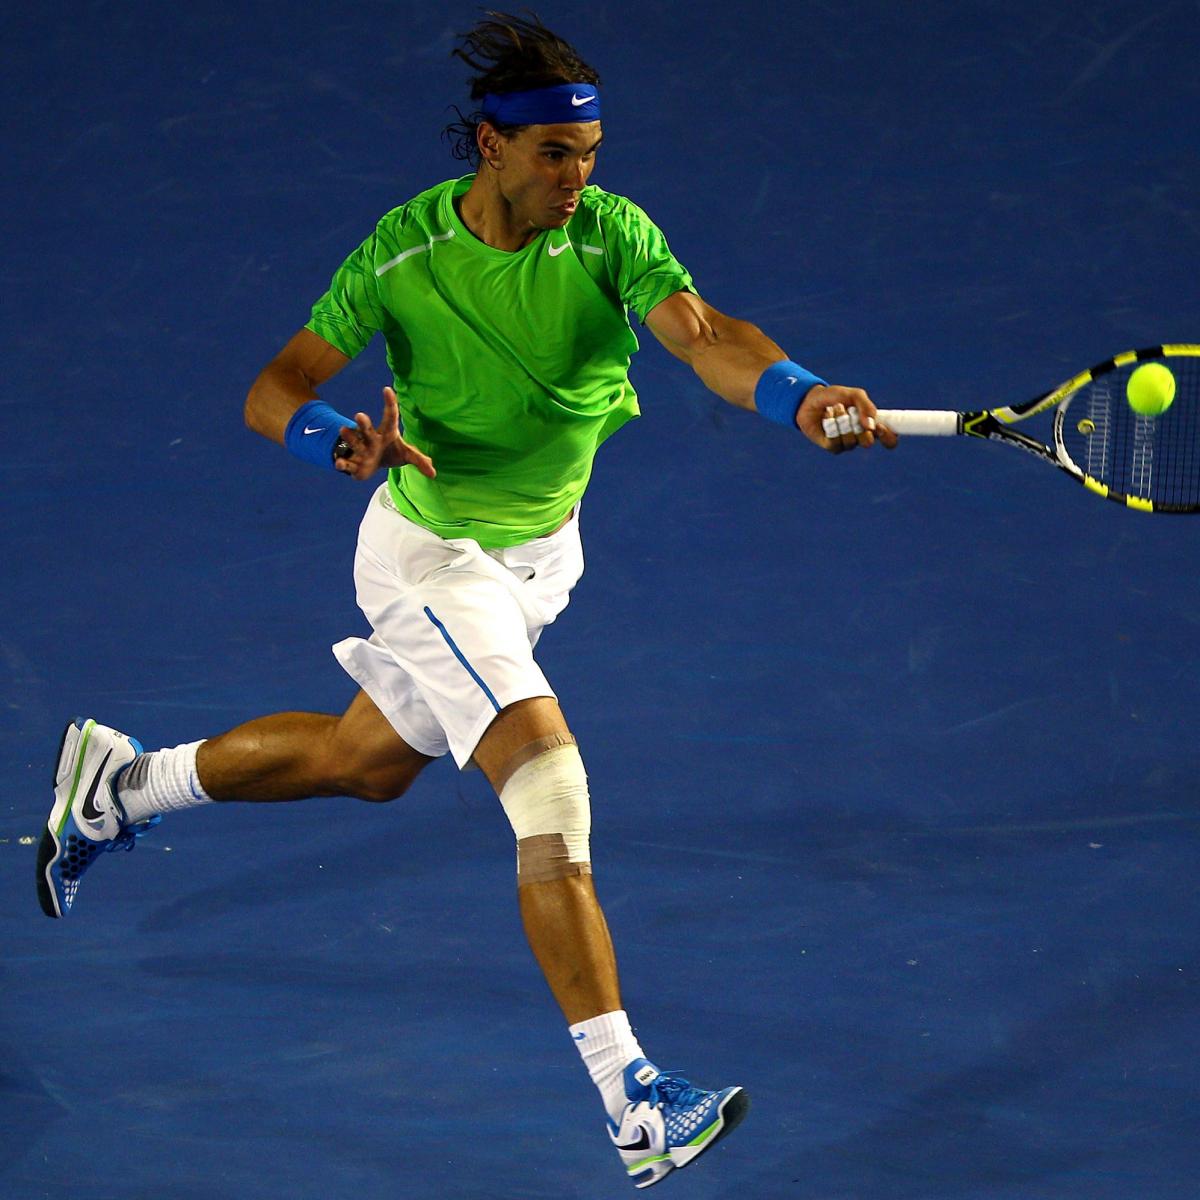 Australian Open 2012 Men's Semifinal: Why Rafael Nadal Will Advance to